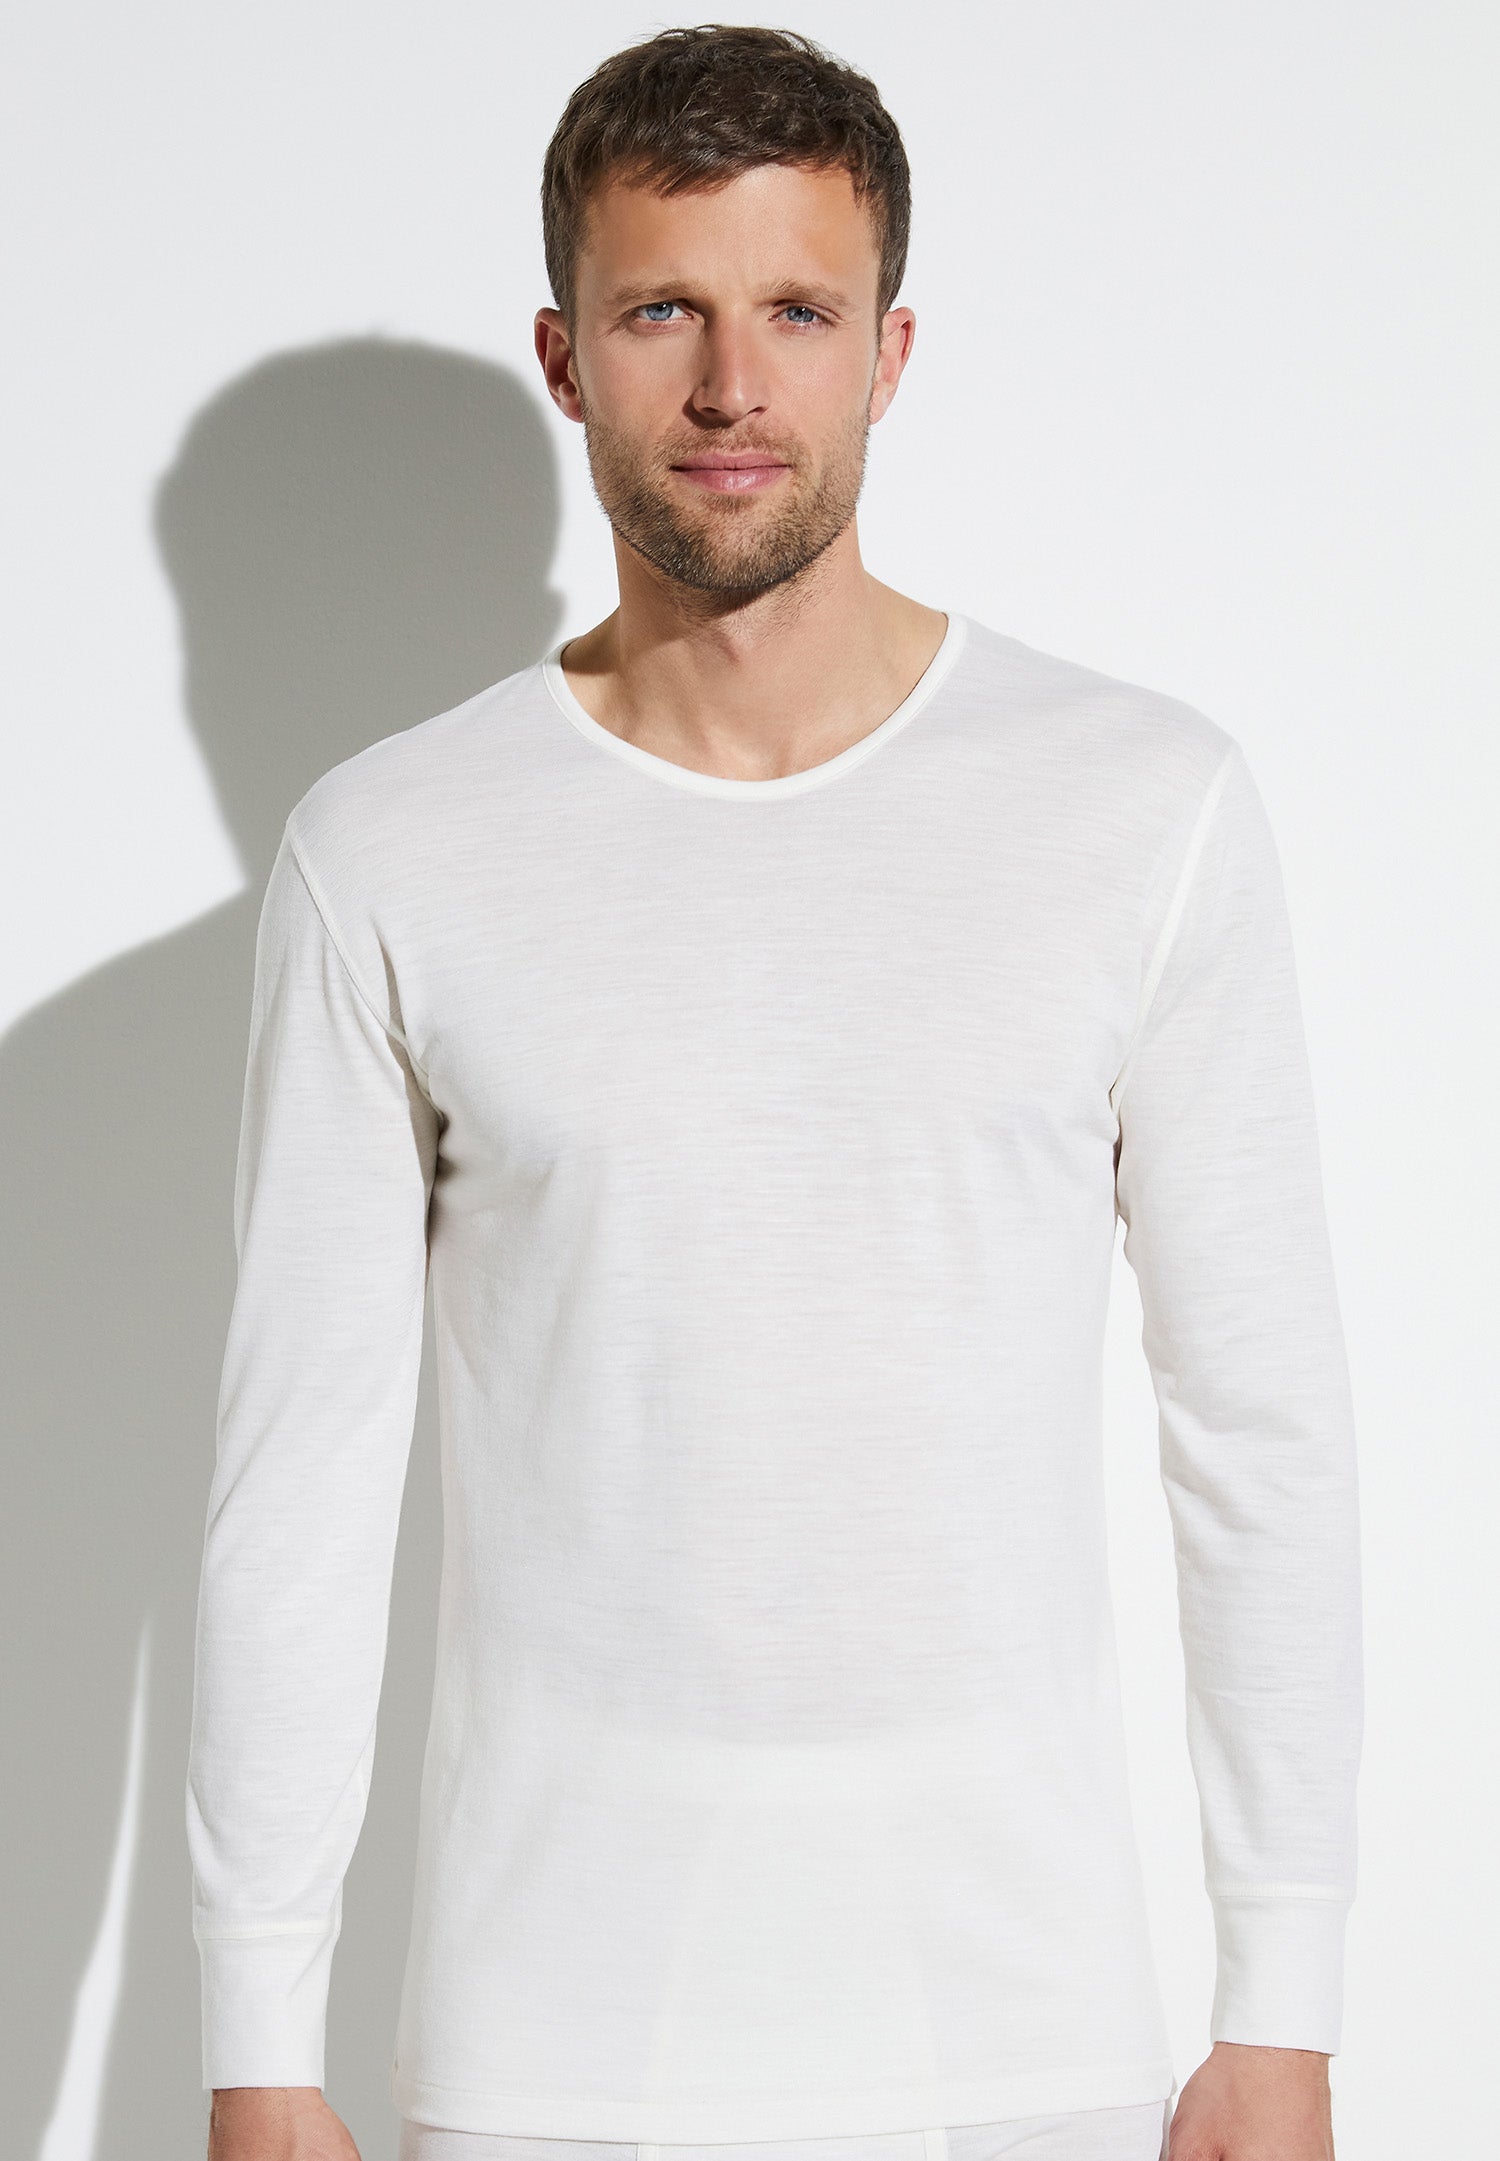 White Dress Shirts For Men Male Winter Warm High Collar Fashion Thermal  Underwear Men Basic Plain T Shirt Blouse Pullover Long Sleeve Top